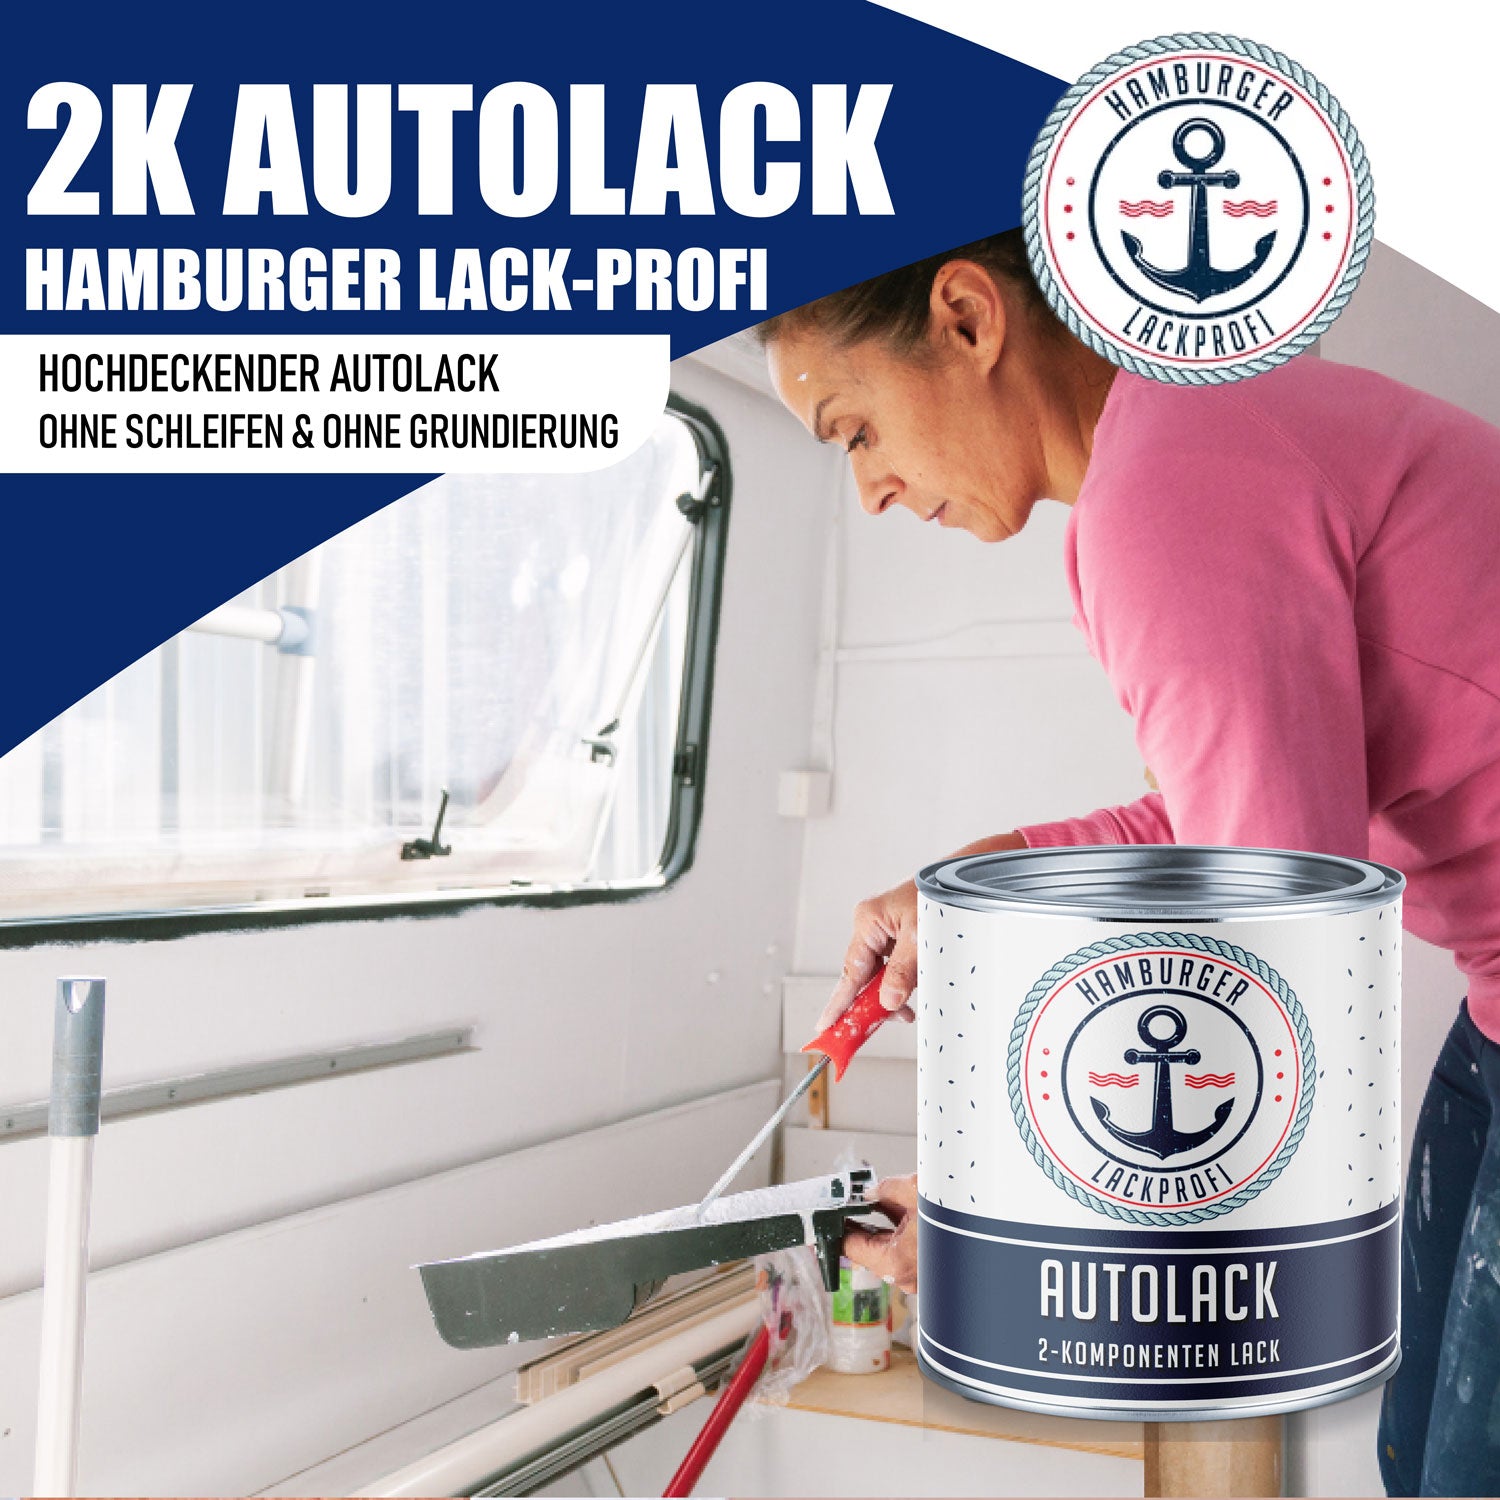 Hamburger Lack-Profi 2K Autolack in Graualuminium RAL 9007 mit Lackierset (X300) & Verdünnung (1 L) - 30% Sparangebot